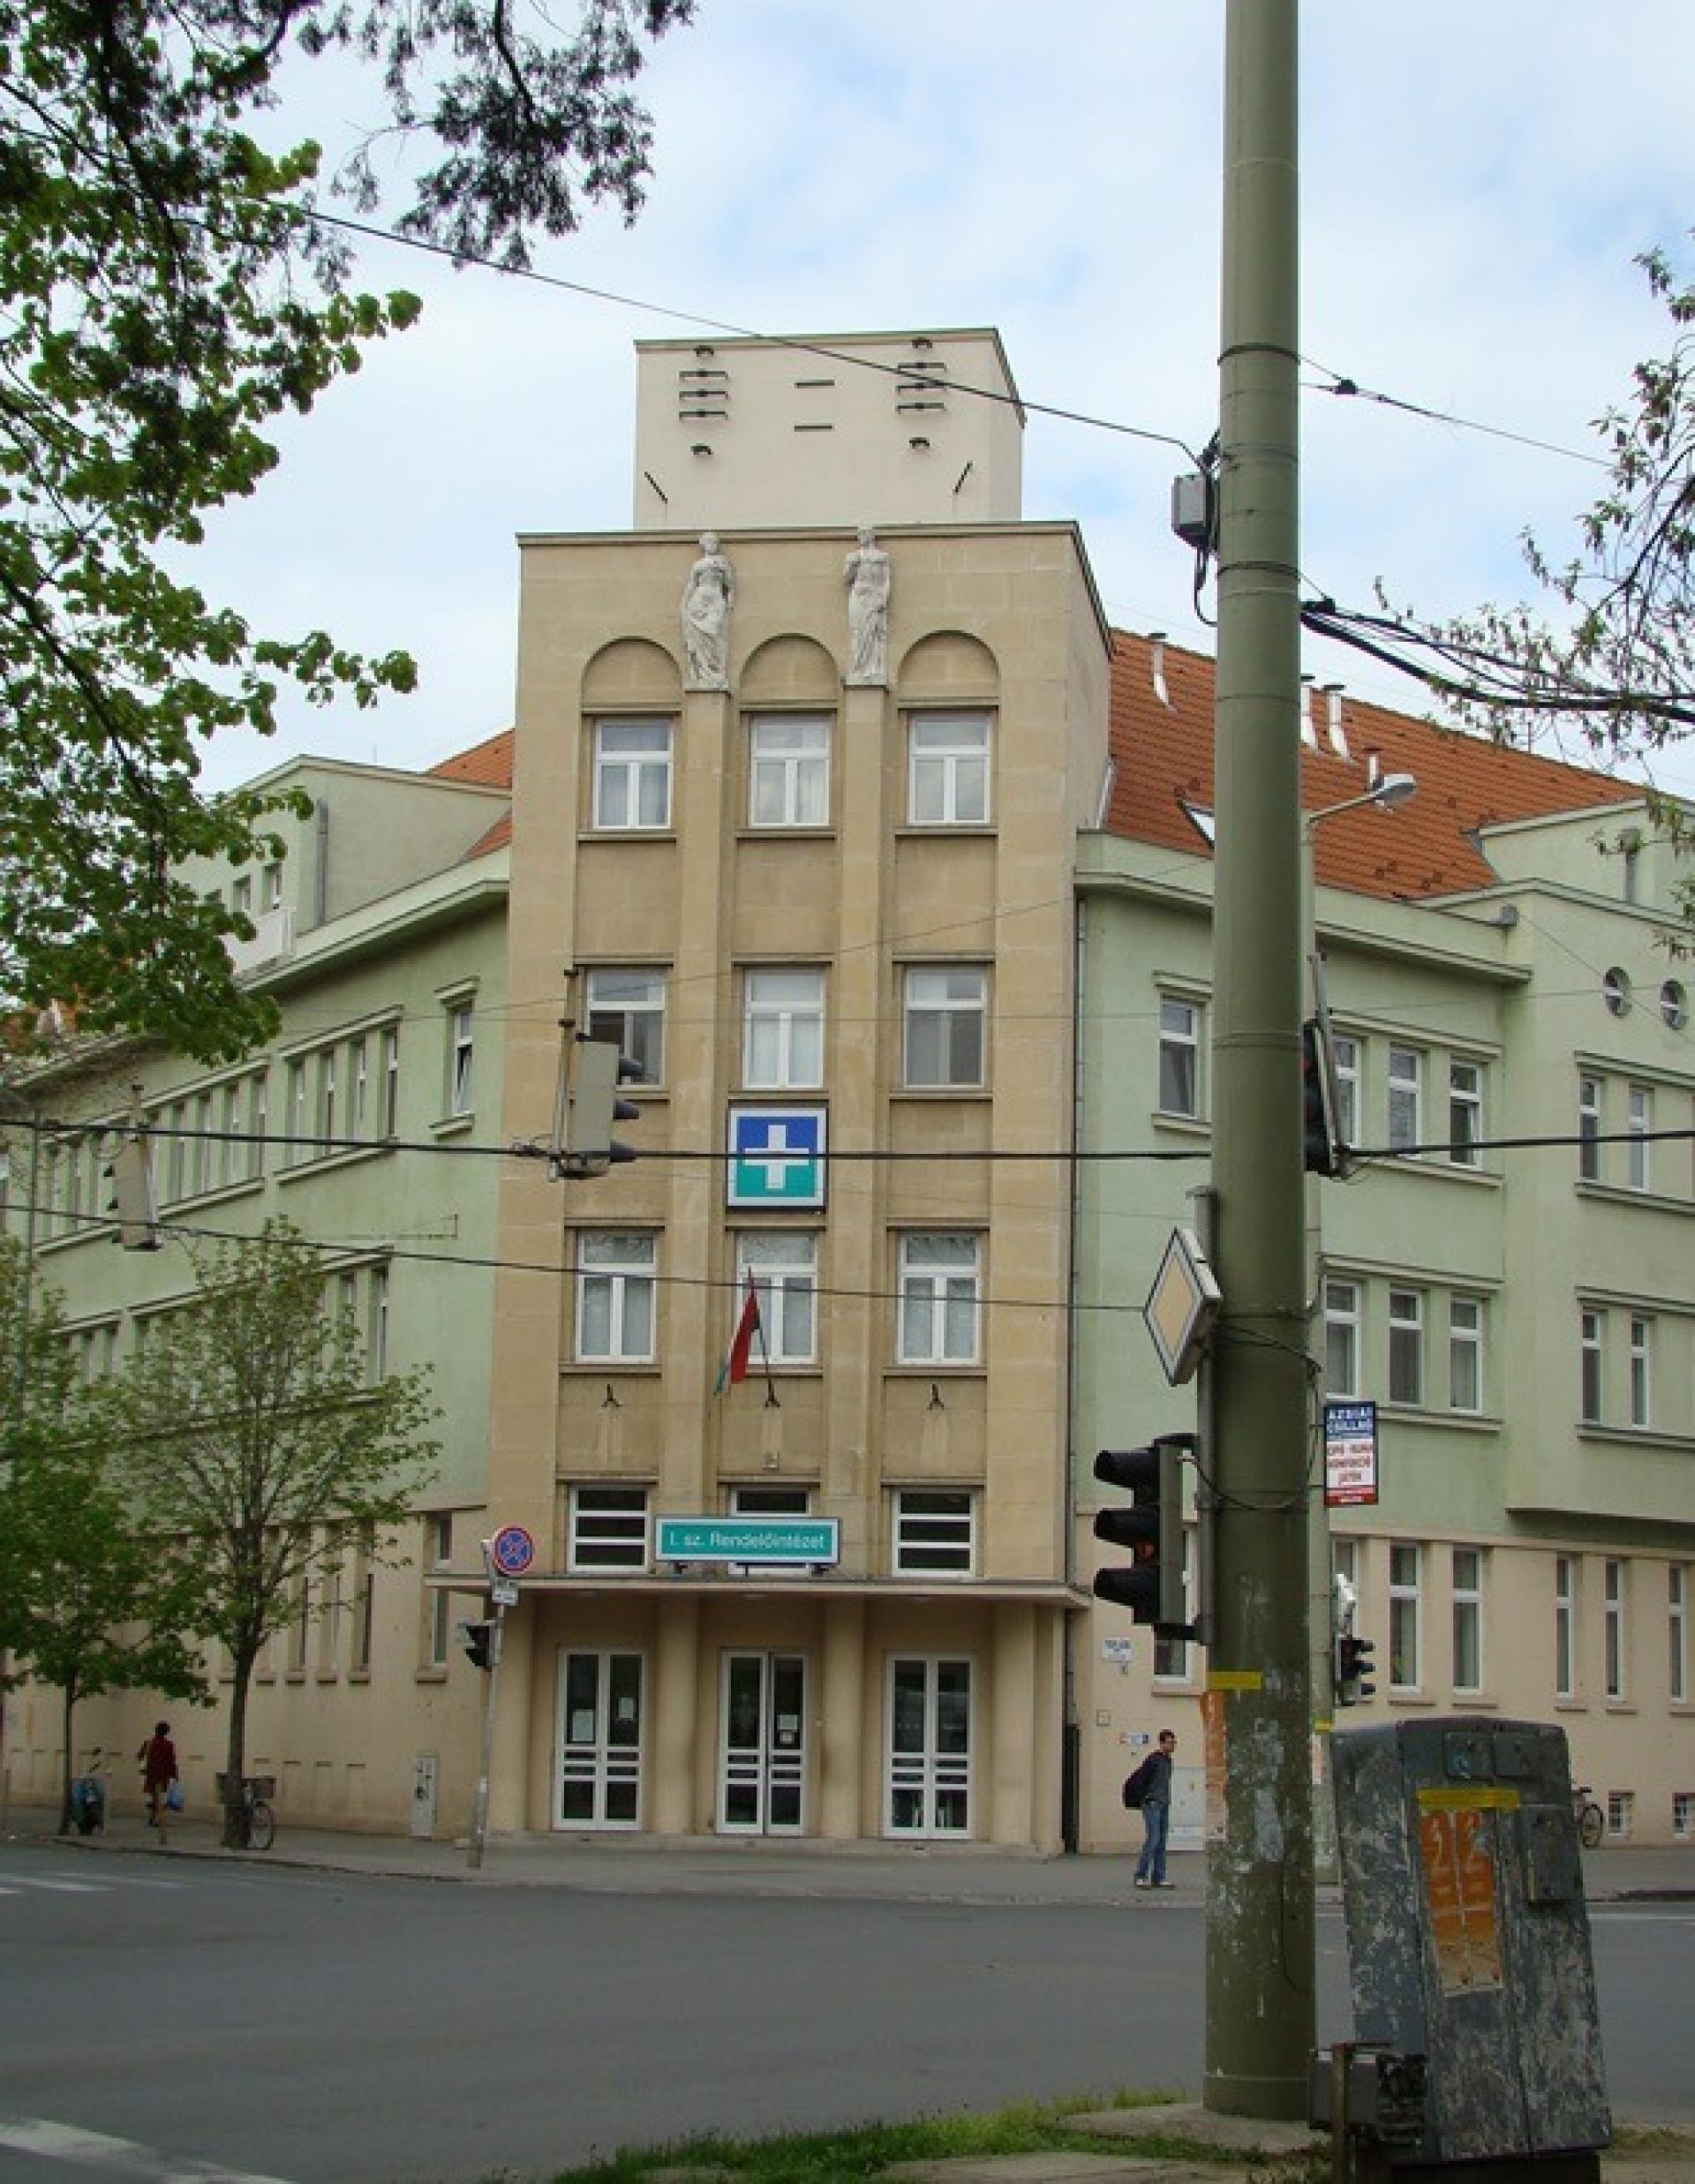 Várnay’s OTI building in Szeged. | Photo via atomboy, Wikimedia Commons